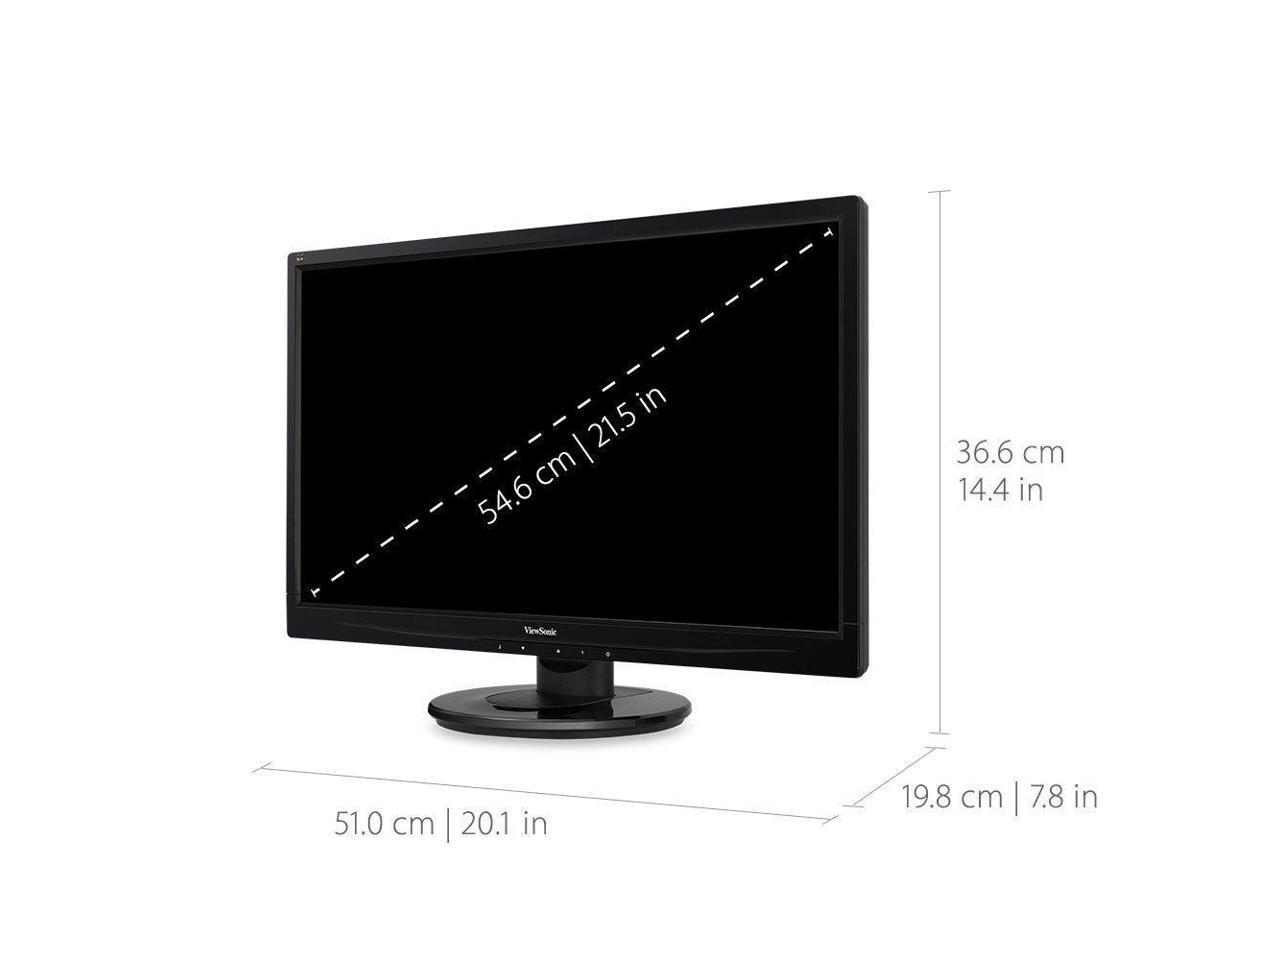 ViewSonic VA2246MH-LED 22" (Actual size 21.5") Full HD 1920 x 1080 5ms (GTG) VGA HDMI Built-in Speakers Anti-Glare LED Backlight LCD Monitor